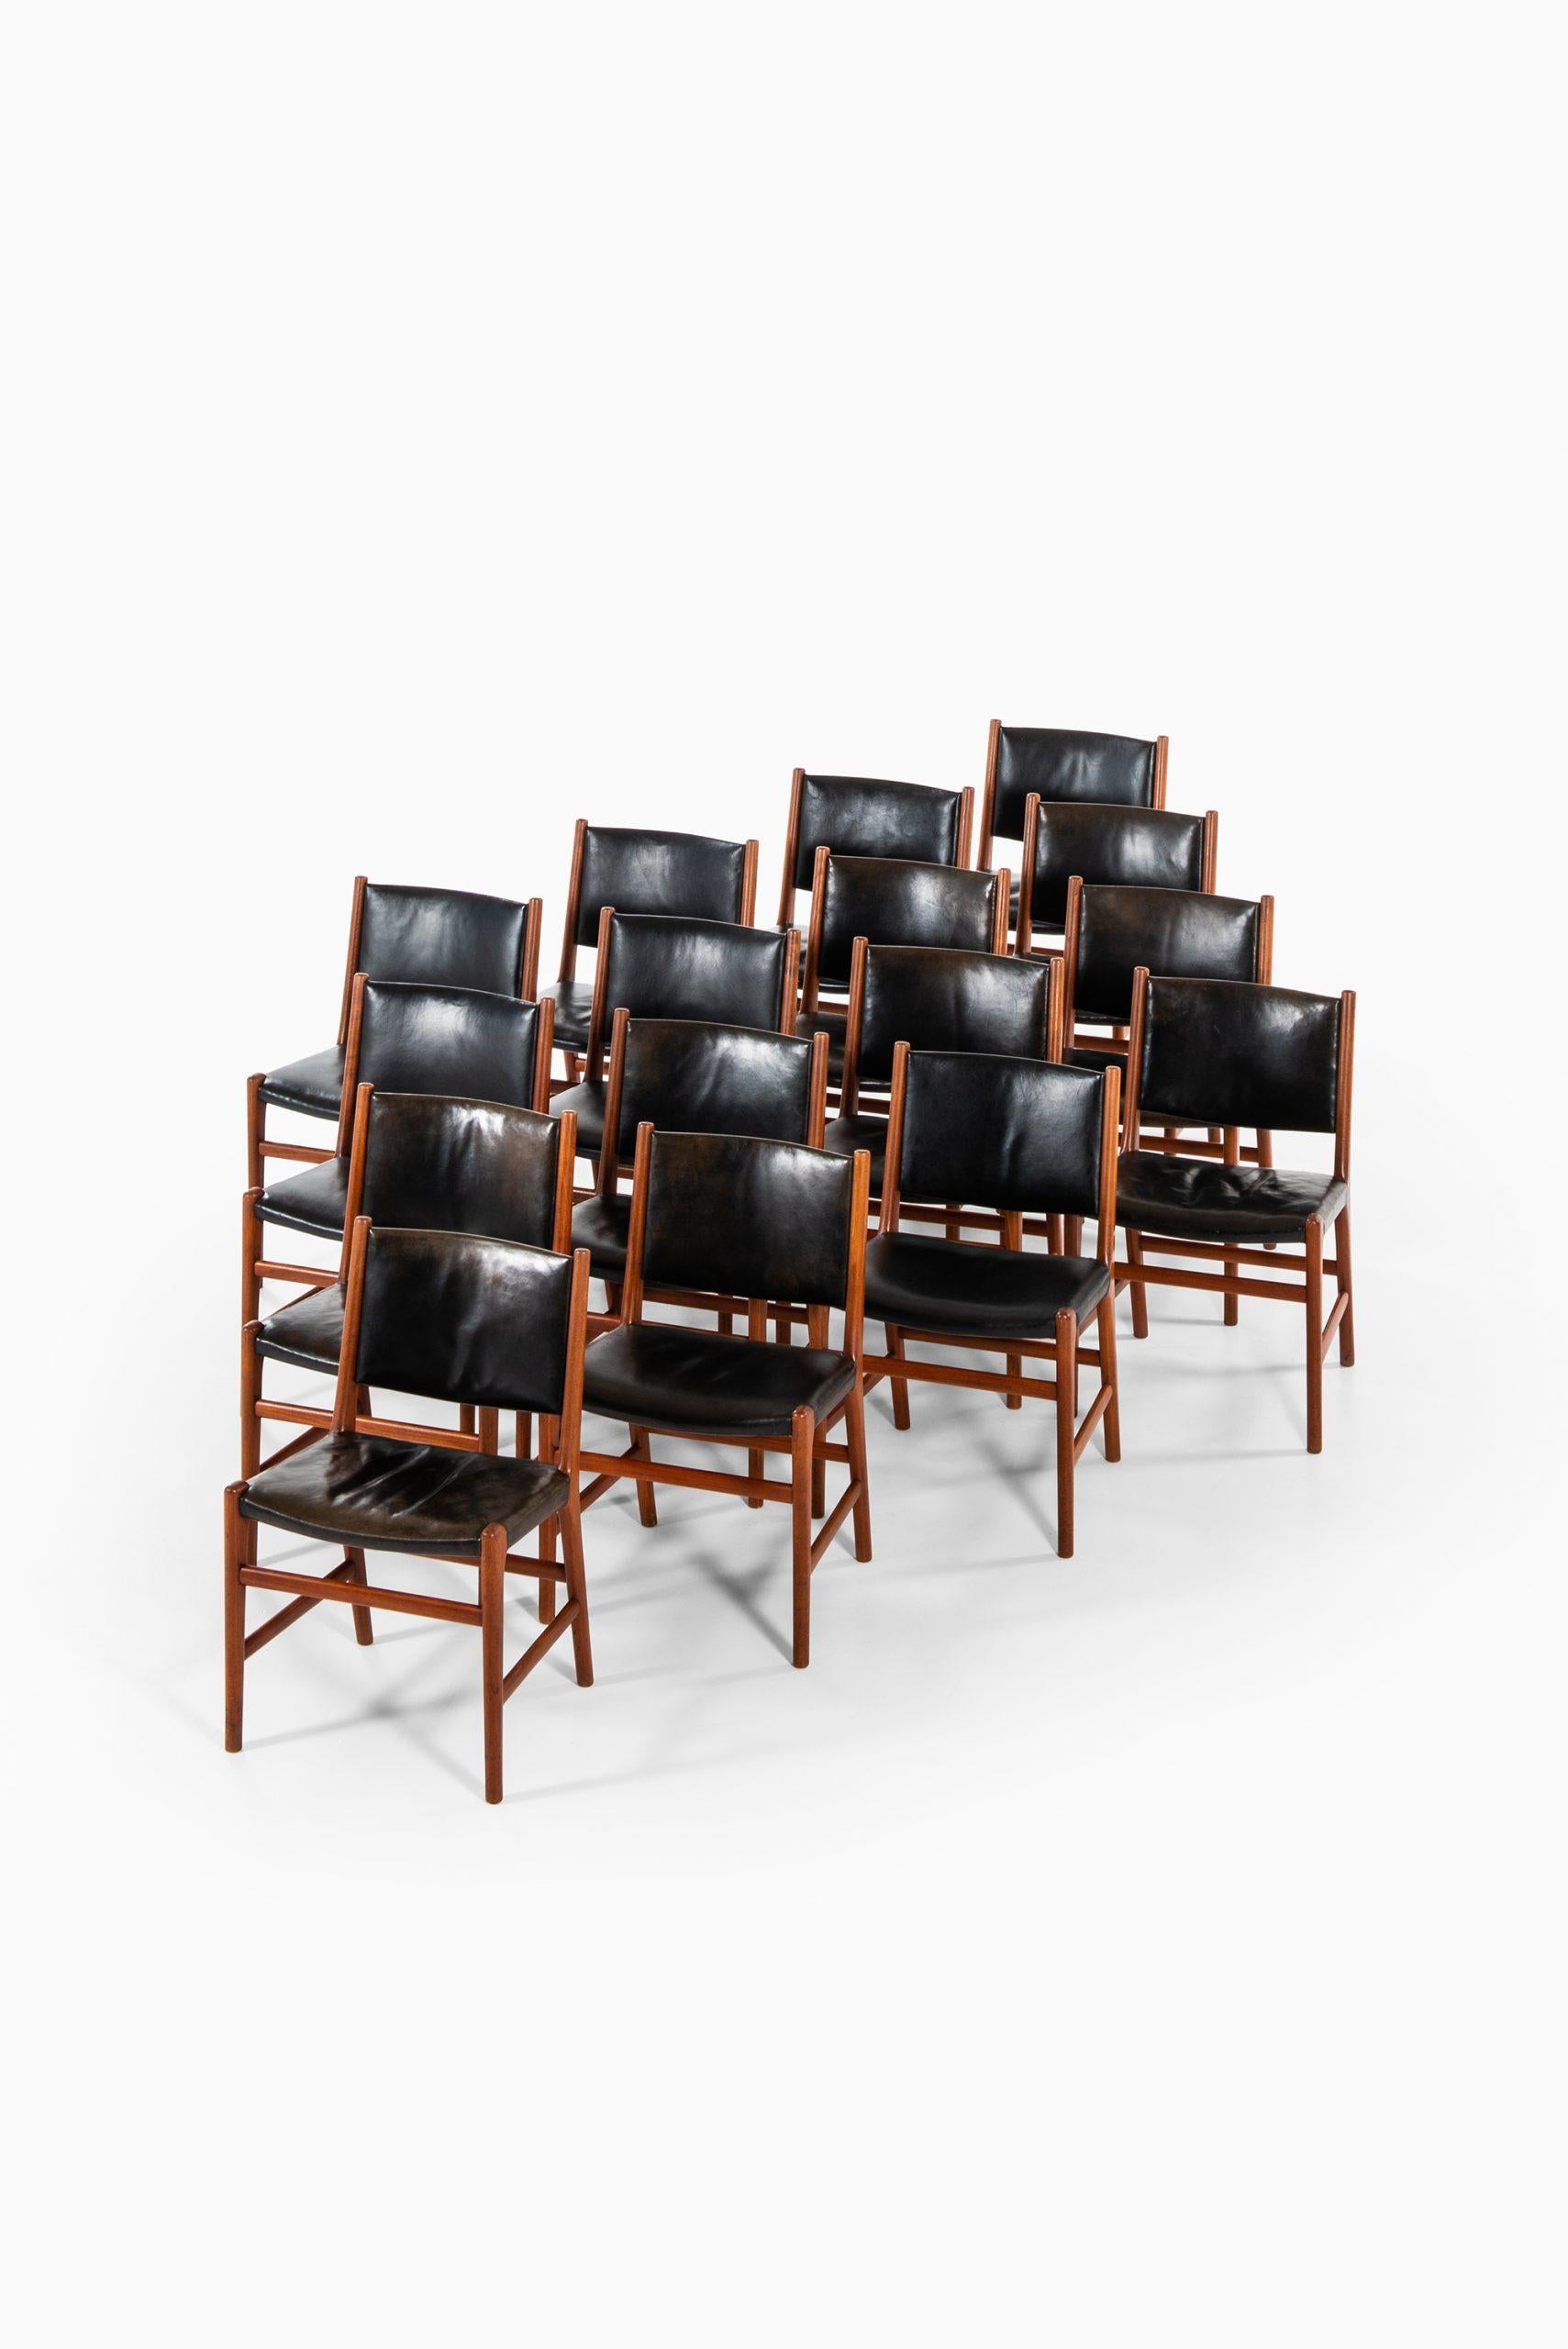 Rare set of 16 dining chairs variant of model JH507 designed by Hans Wegner. Produced by cabinetmaker Johannes Hansen in Denmark.